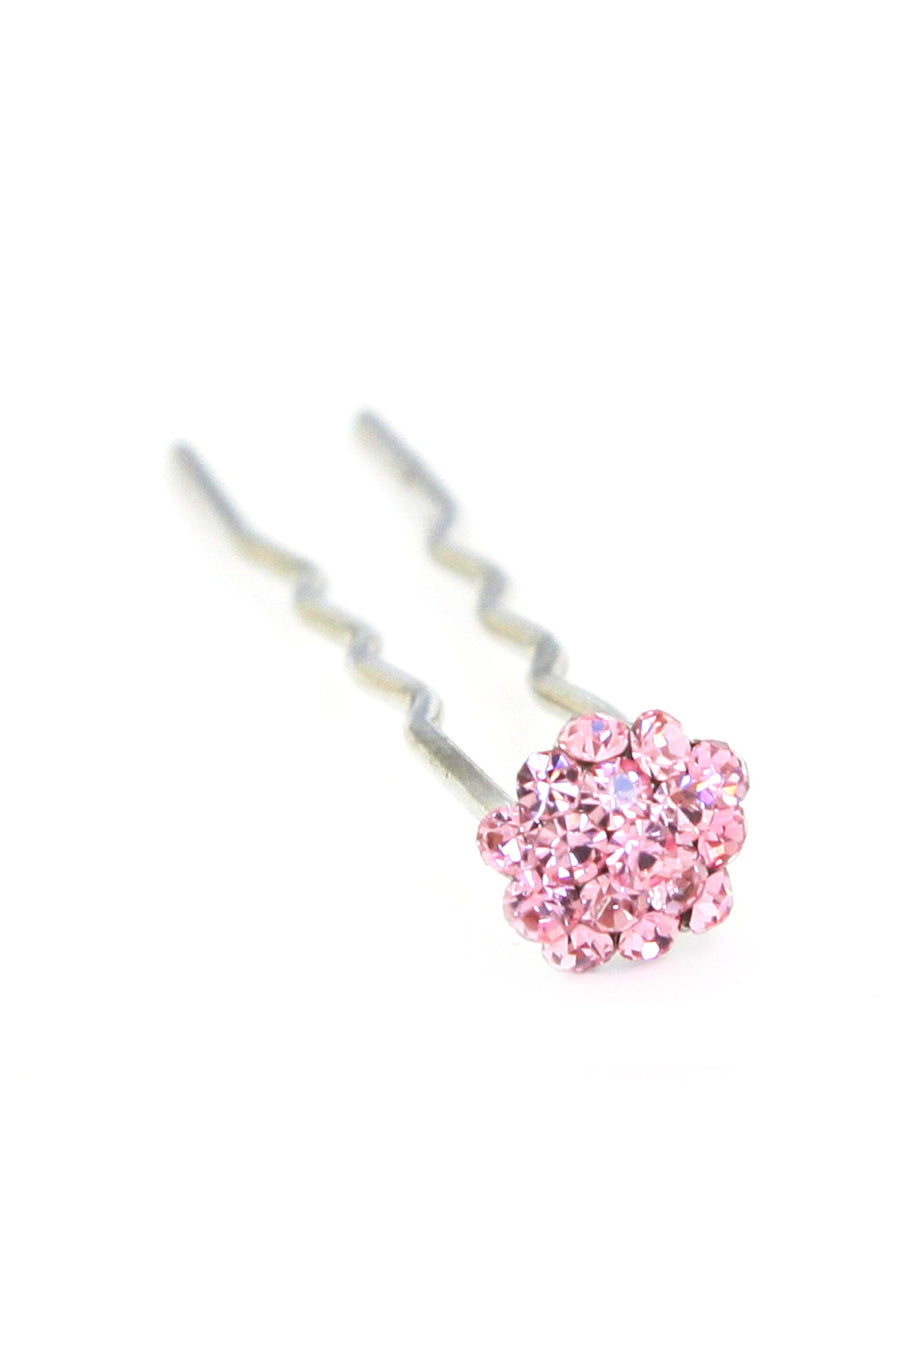 Soho Style Stick Pink Mini Crystal Cluster Hair Stick